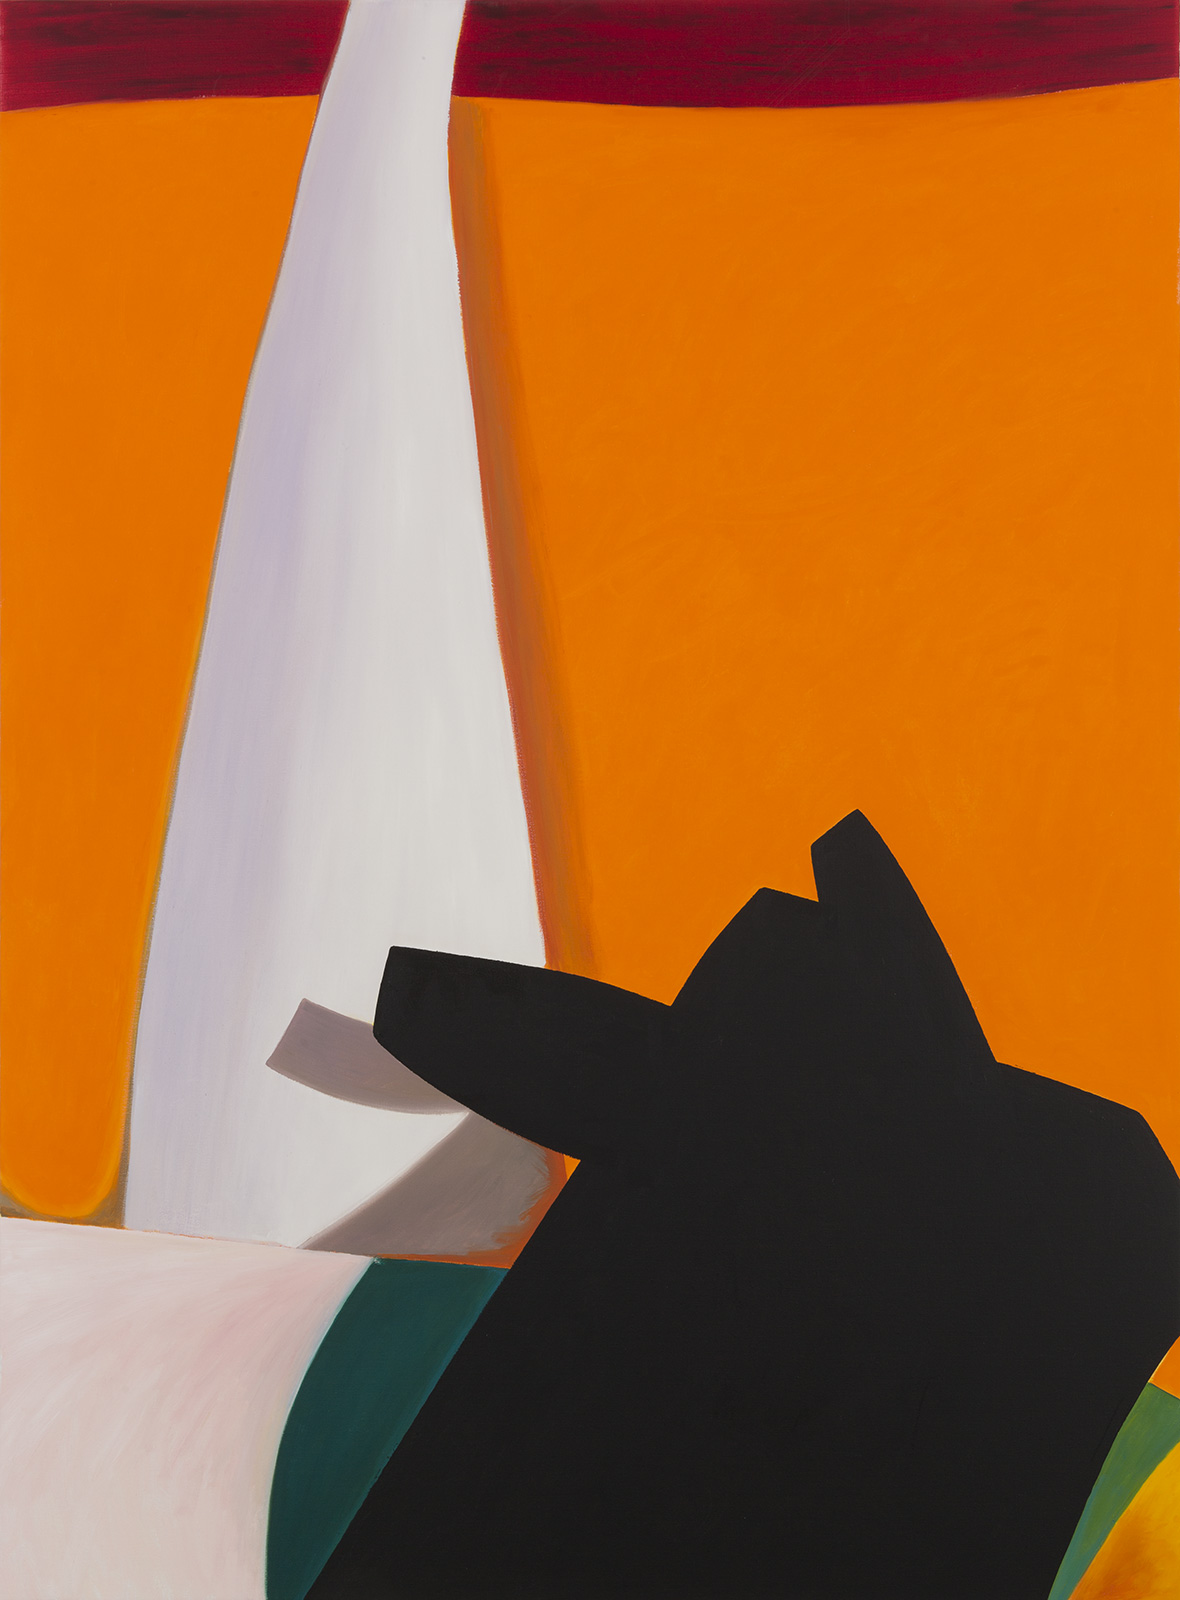 Jan Svenungsson, "Painting #30", 2013, oil on canvas, 190 x  140 cm